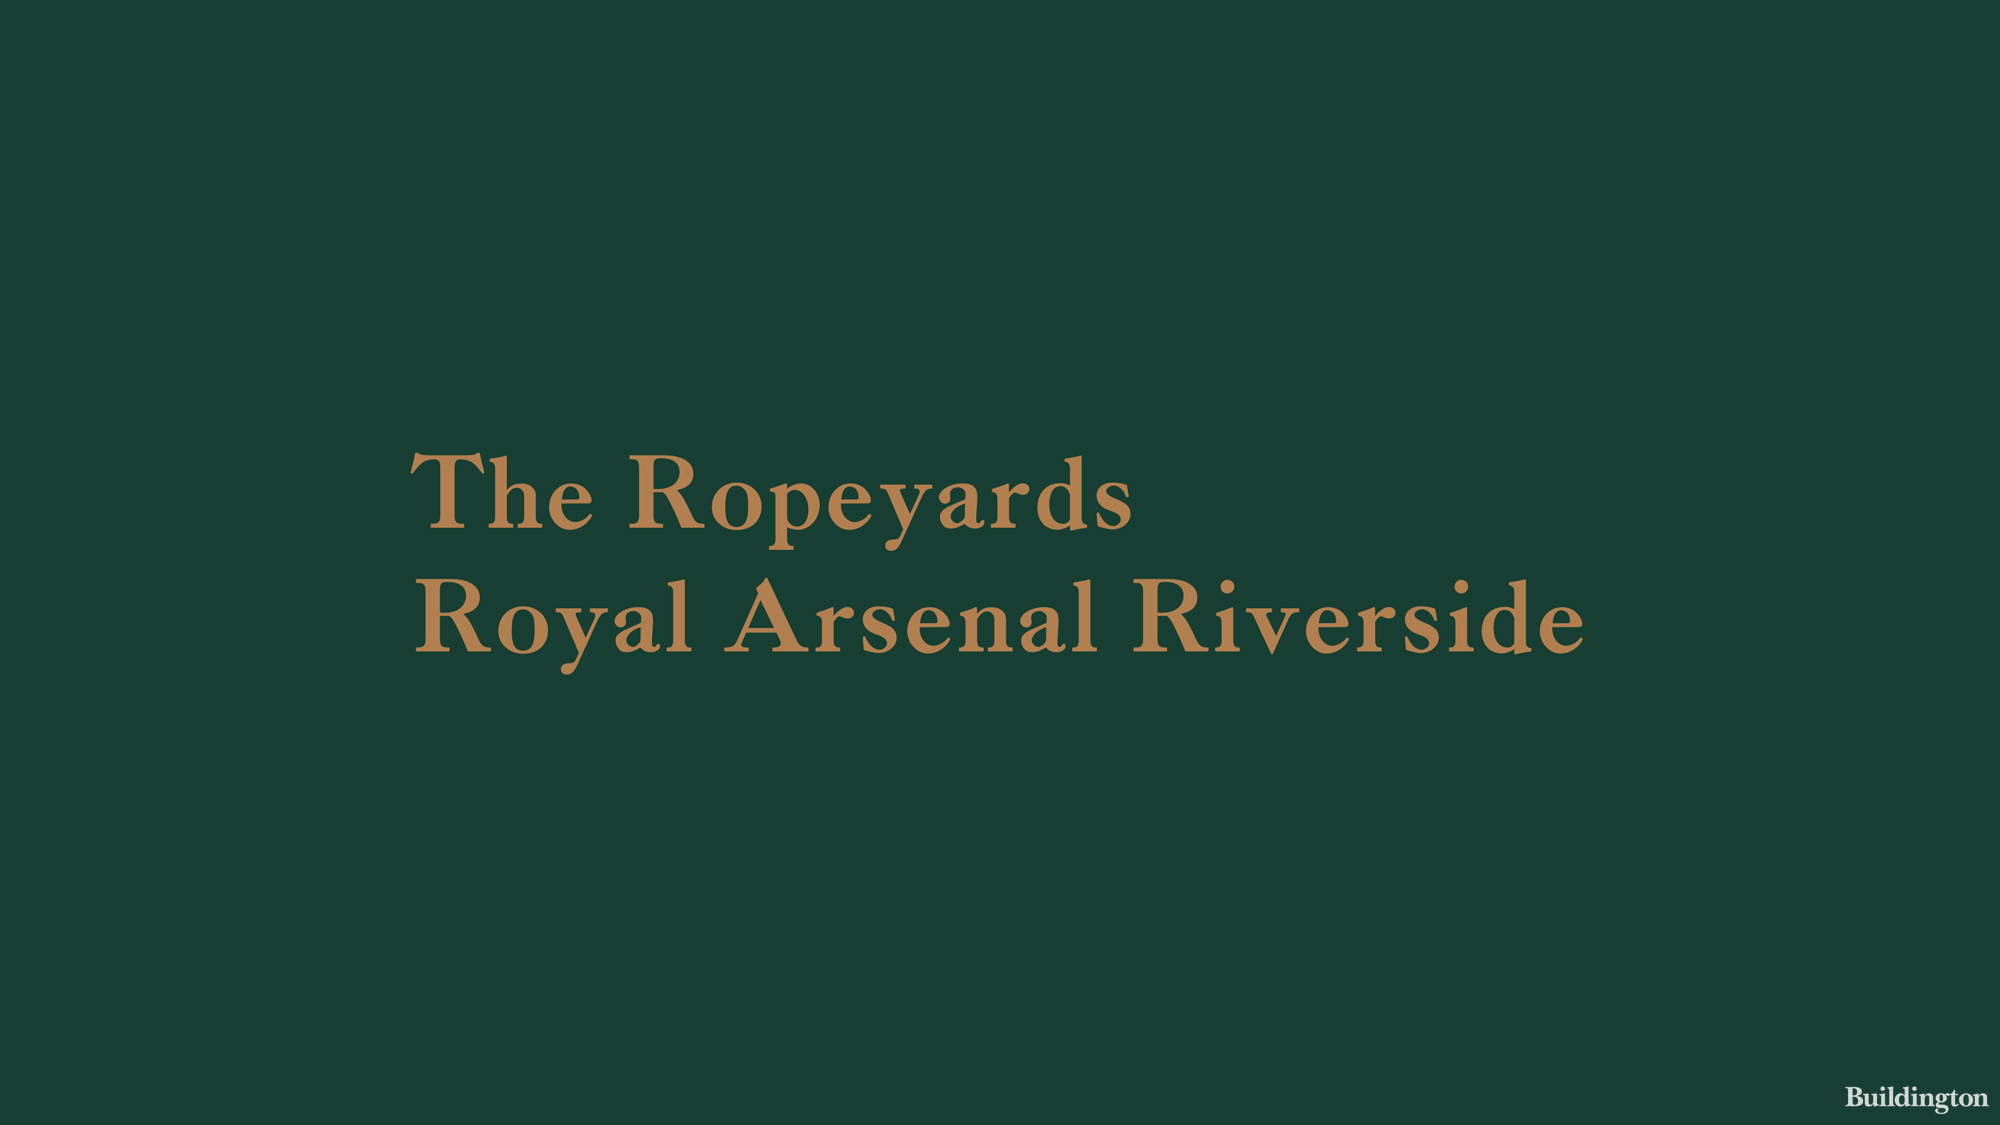 The Ropeyards at The Royal Arsenal Riverside